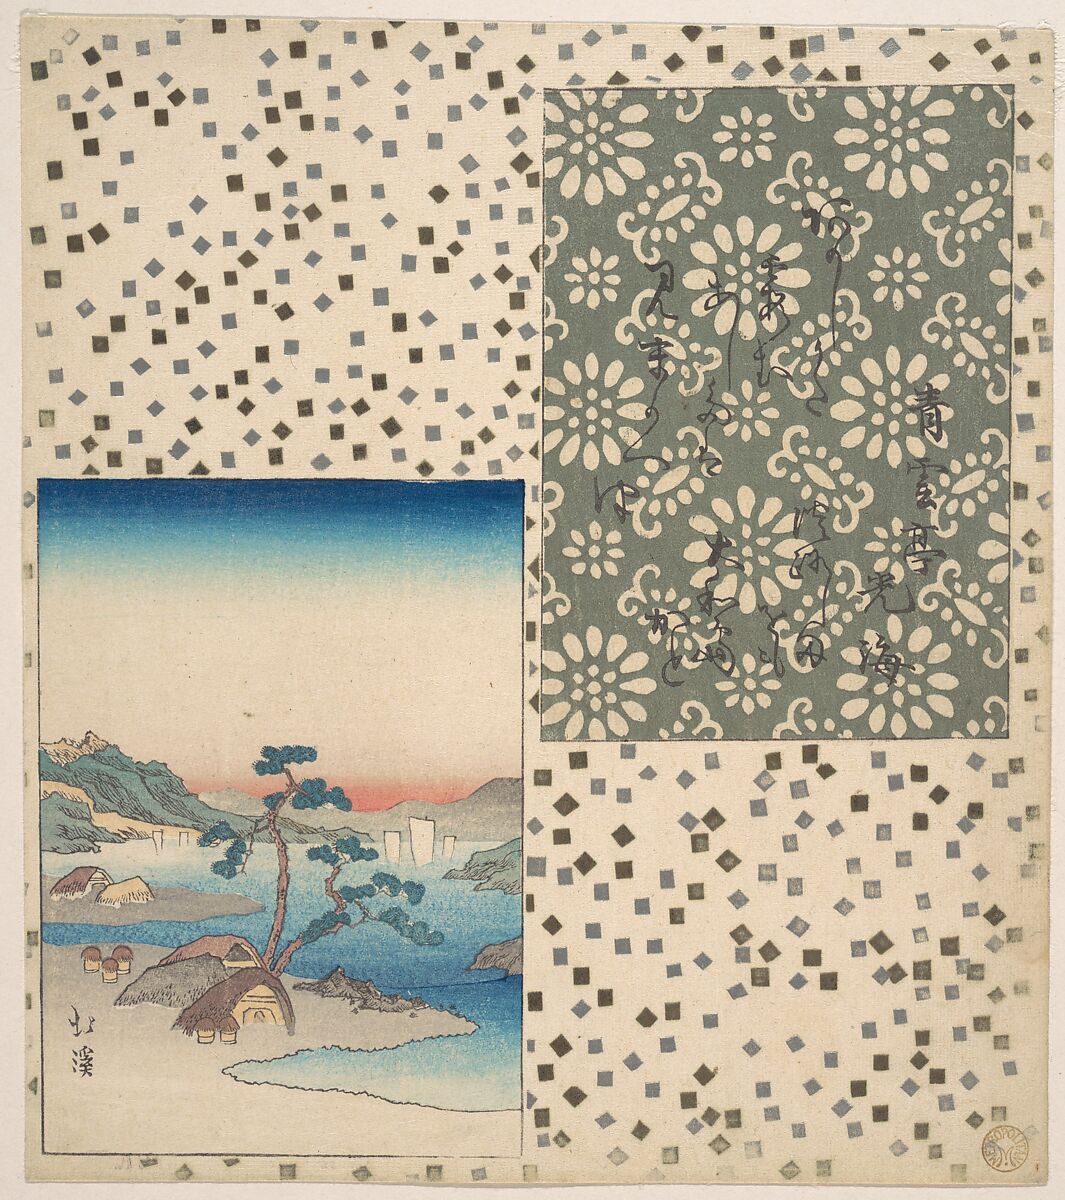 Print, Totoya Hokkei (Japanese, 1780–1850), Woodblock print (surimono); ink and color on paper, Japan 